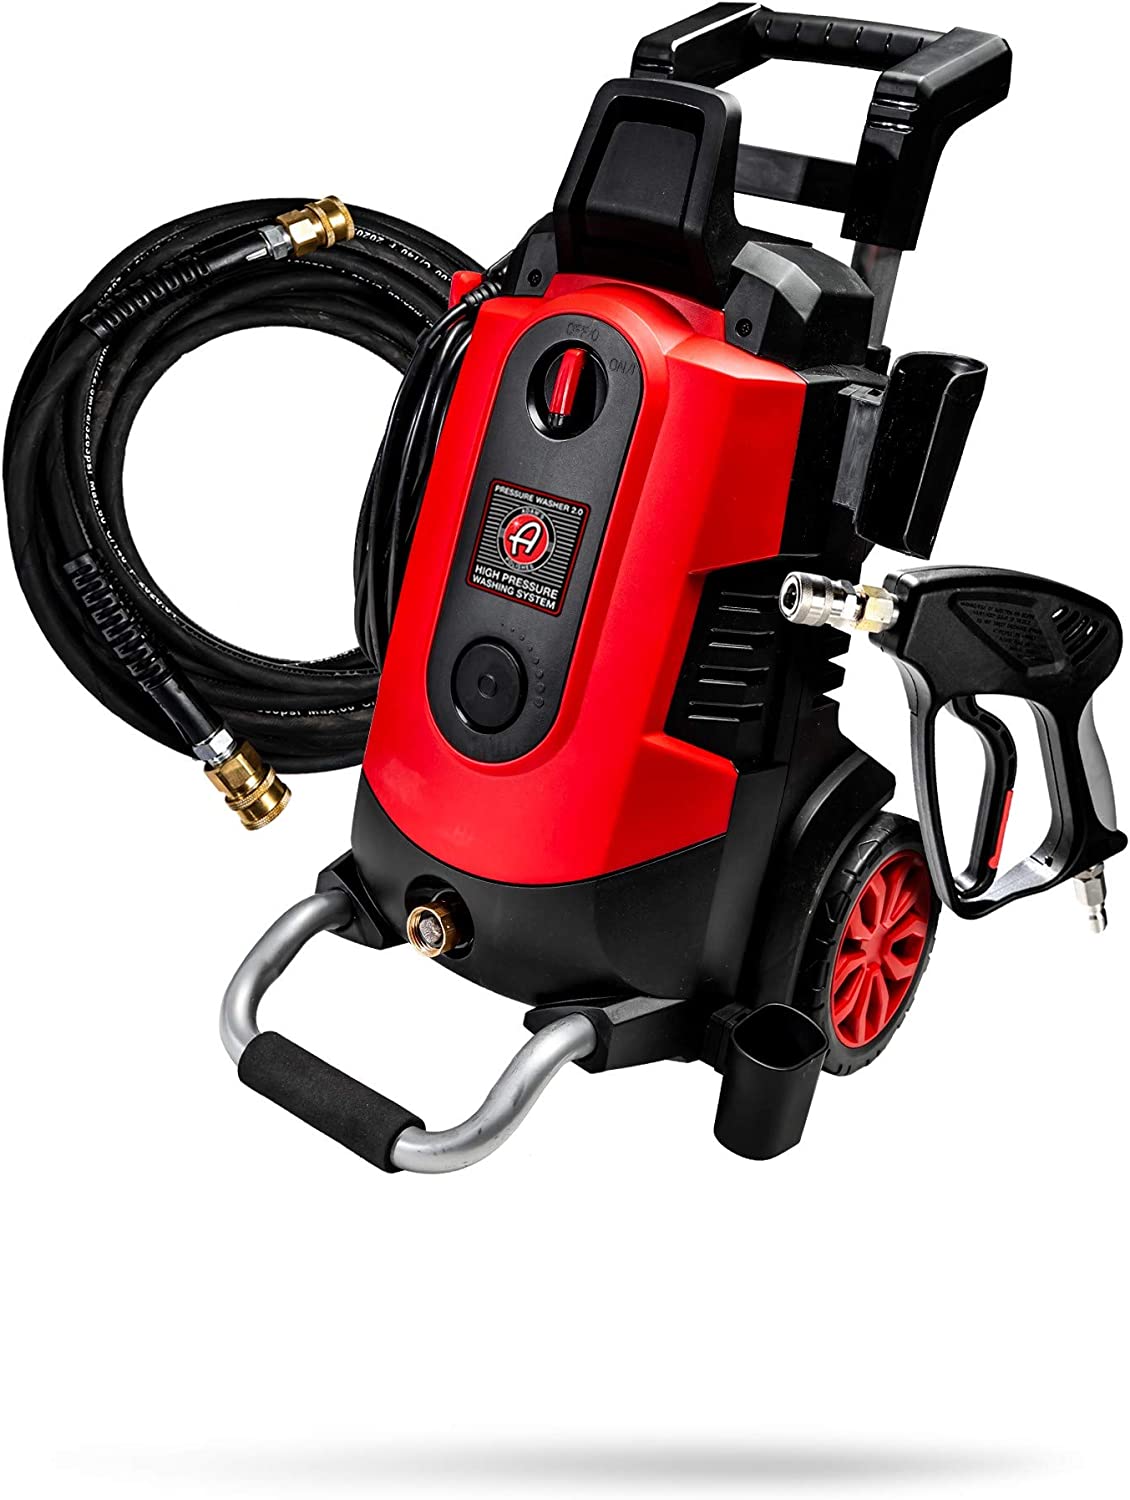 Adam's Electric Pressure Washer 2.0 - Powerful 1.4 GPM 2000 PSI Car Wash Pressure Washer Sprayer Snub Nose & Tip Attachment Use WCar Soap Patio Boat RV Motorcycle Car Garage Deck (2.0 Machine)